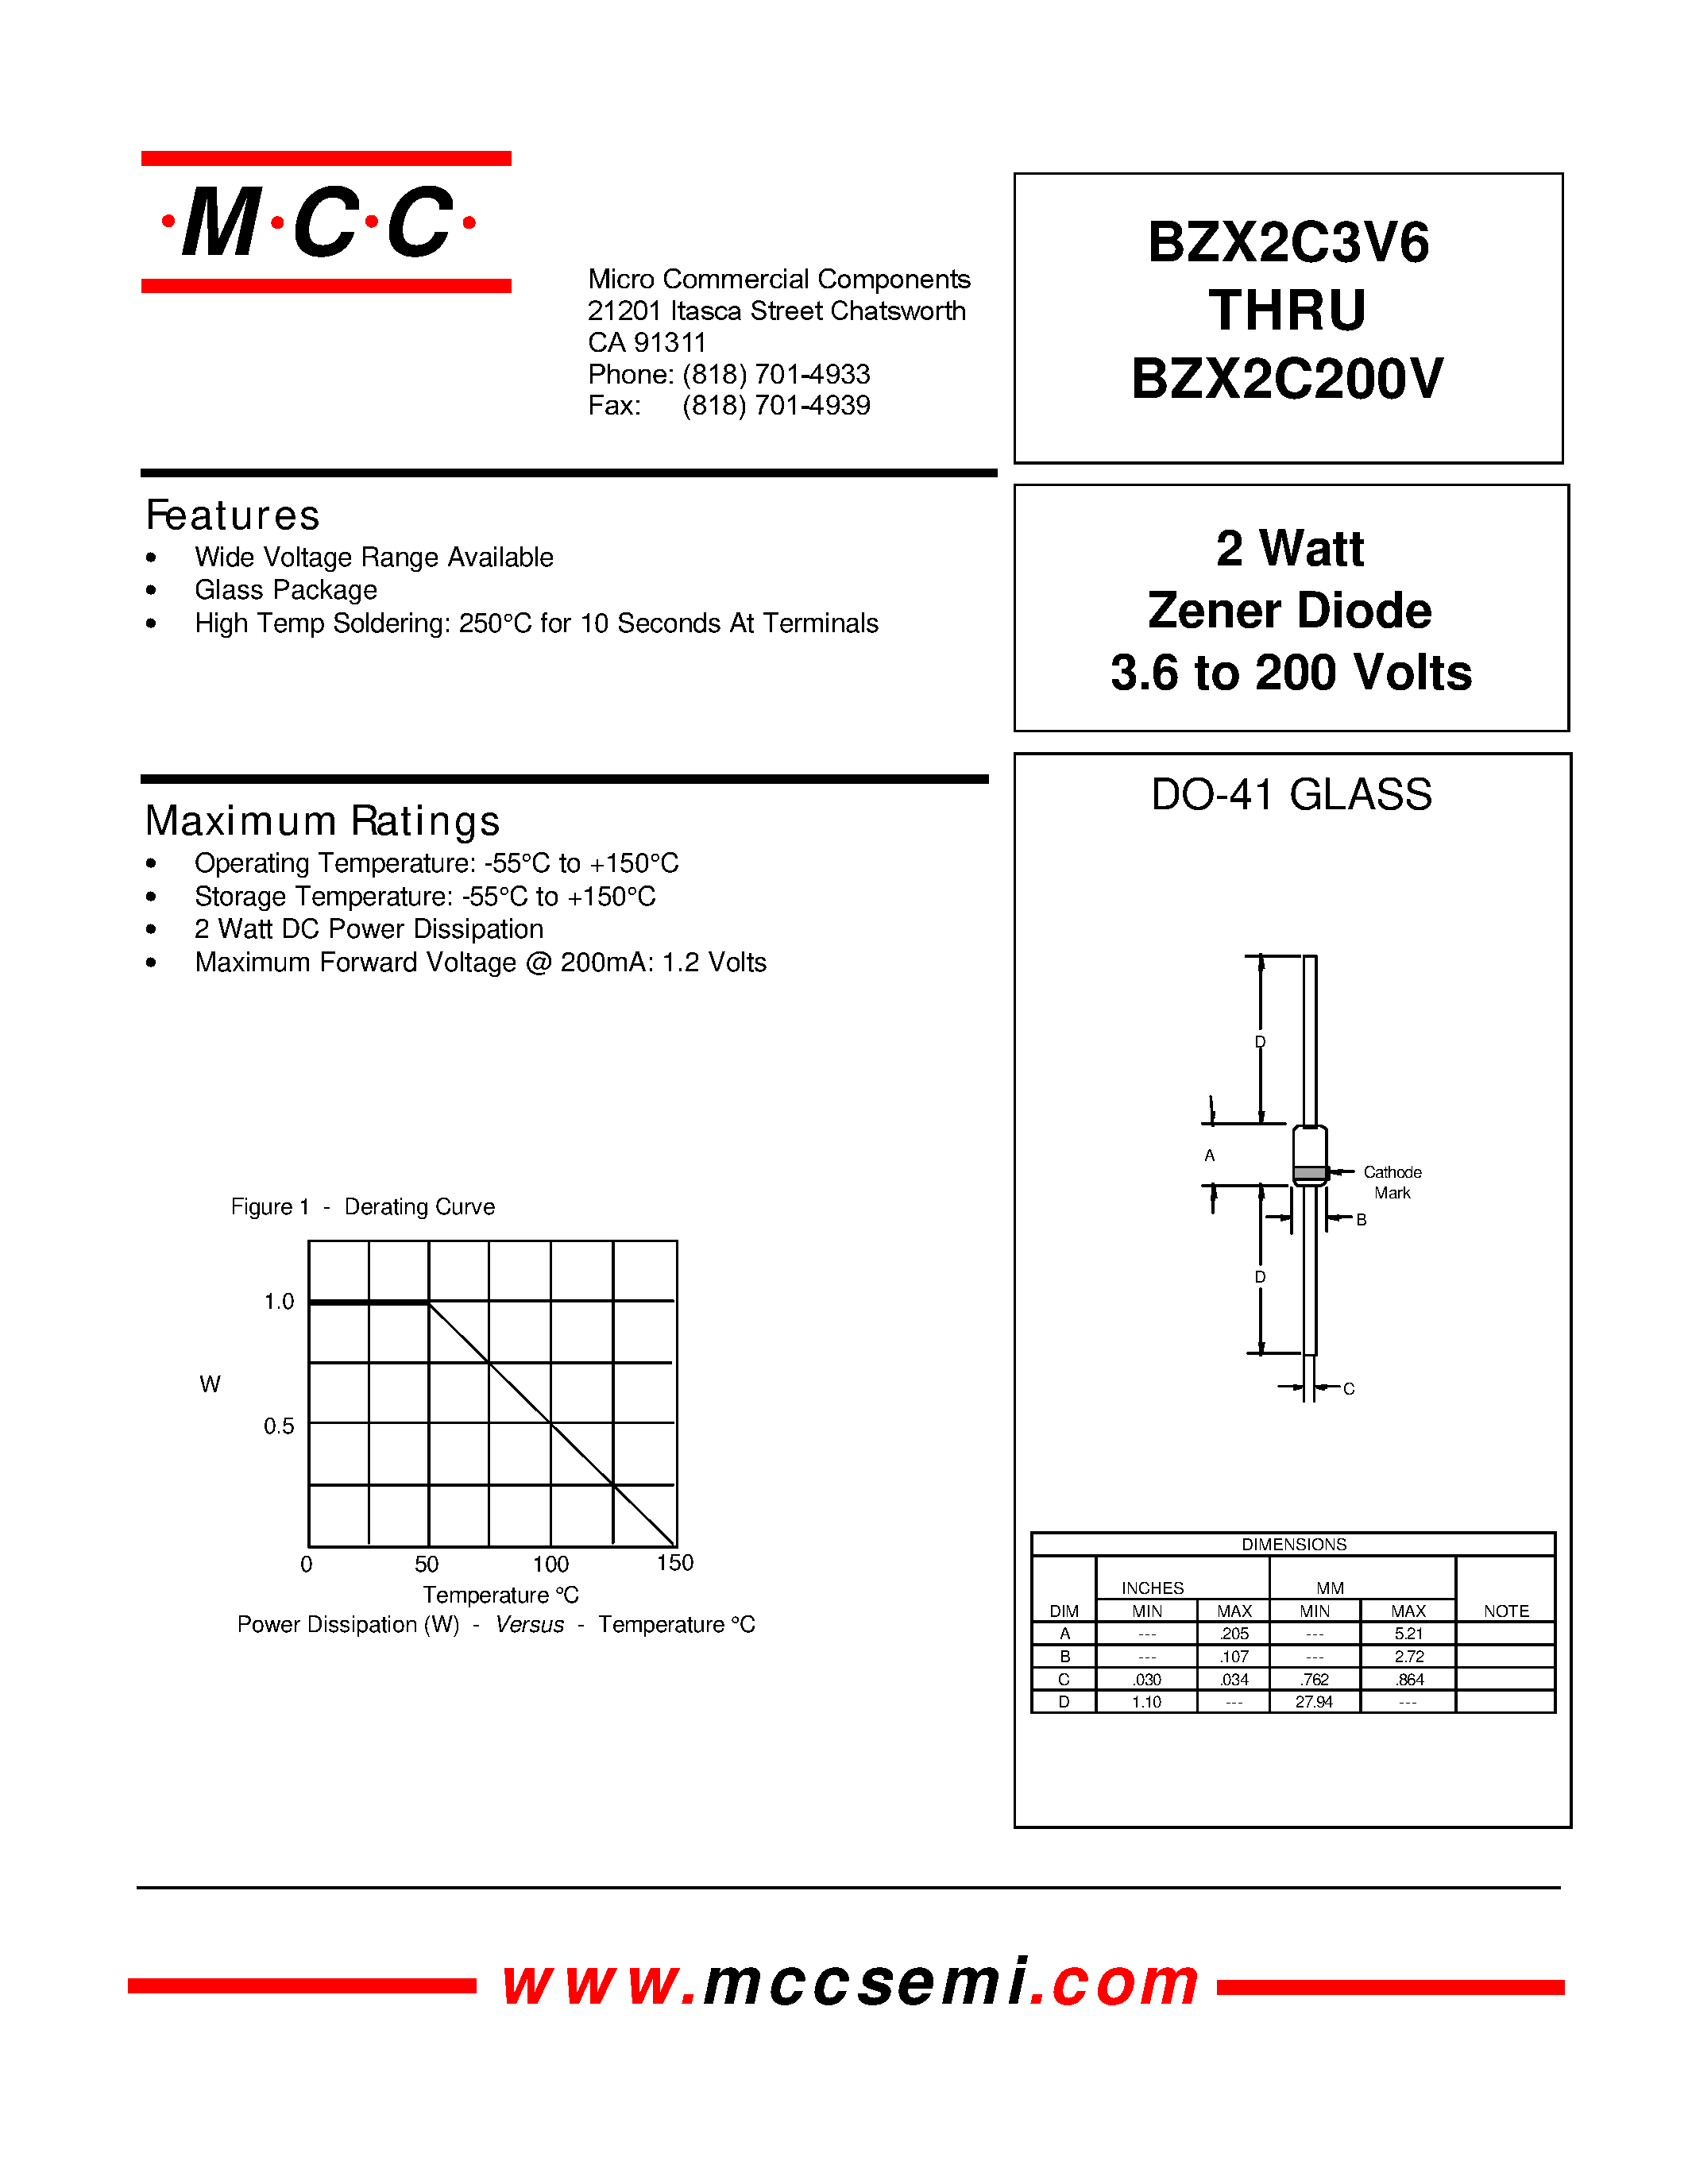 Даташит BZX2C56V - 2 Watt Zener Diode 3.6 to 200 Volts страница 1